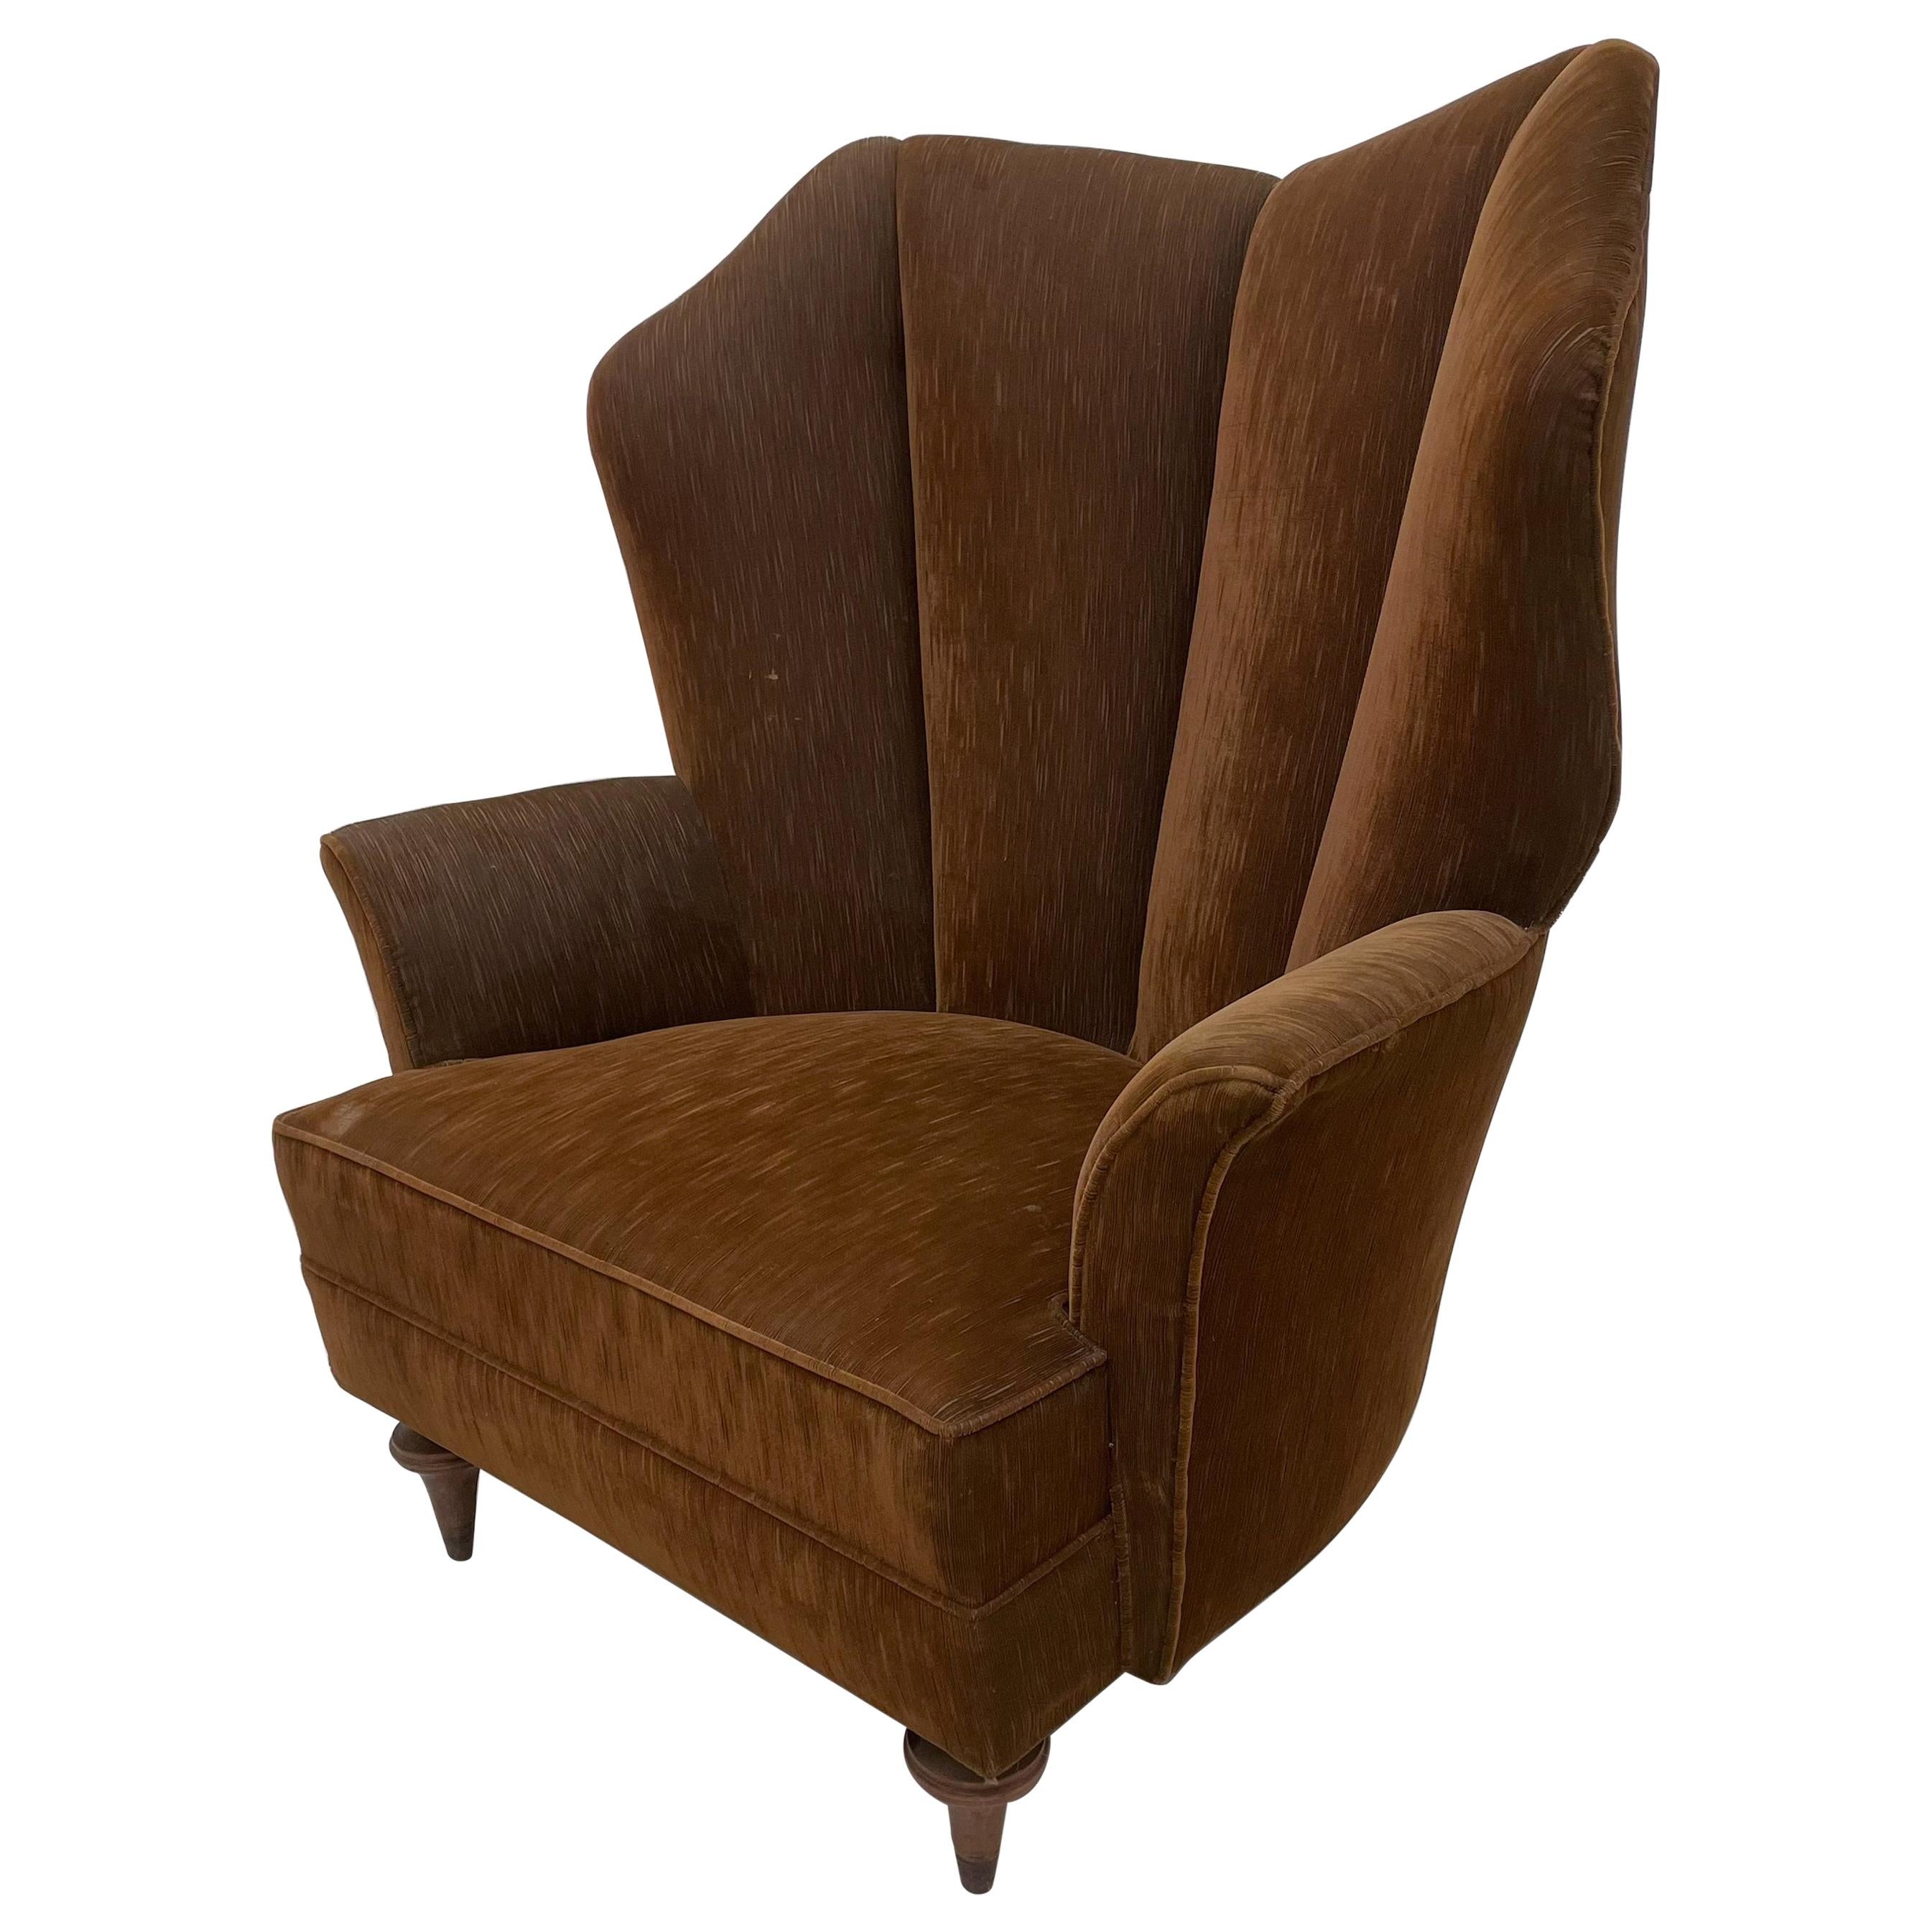 1940s Mexican Regency modernism high wingback lounge armchair by Arturo Pani
Retains original brown mohair.
No design label present. Attribution Arturo Pani Mexico City
Features sculptural walnut wood legs
40.5 H x 34.5 W x 30 D, arm 21.5 H, seat